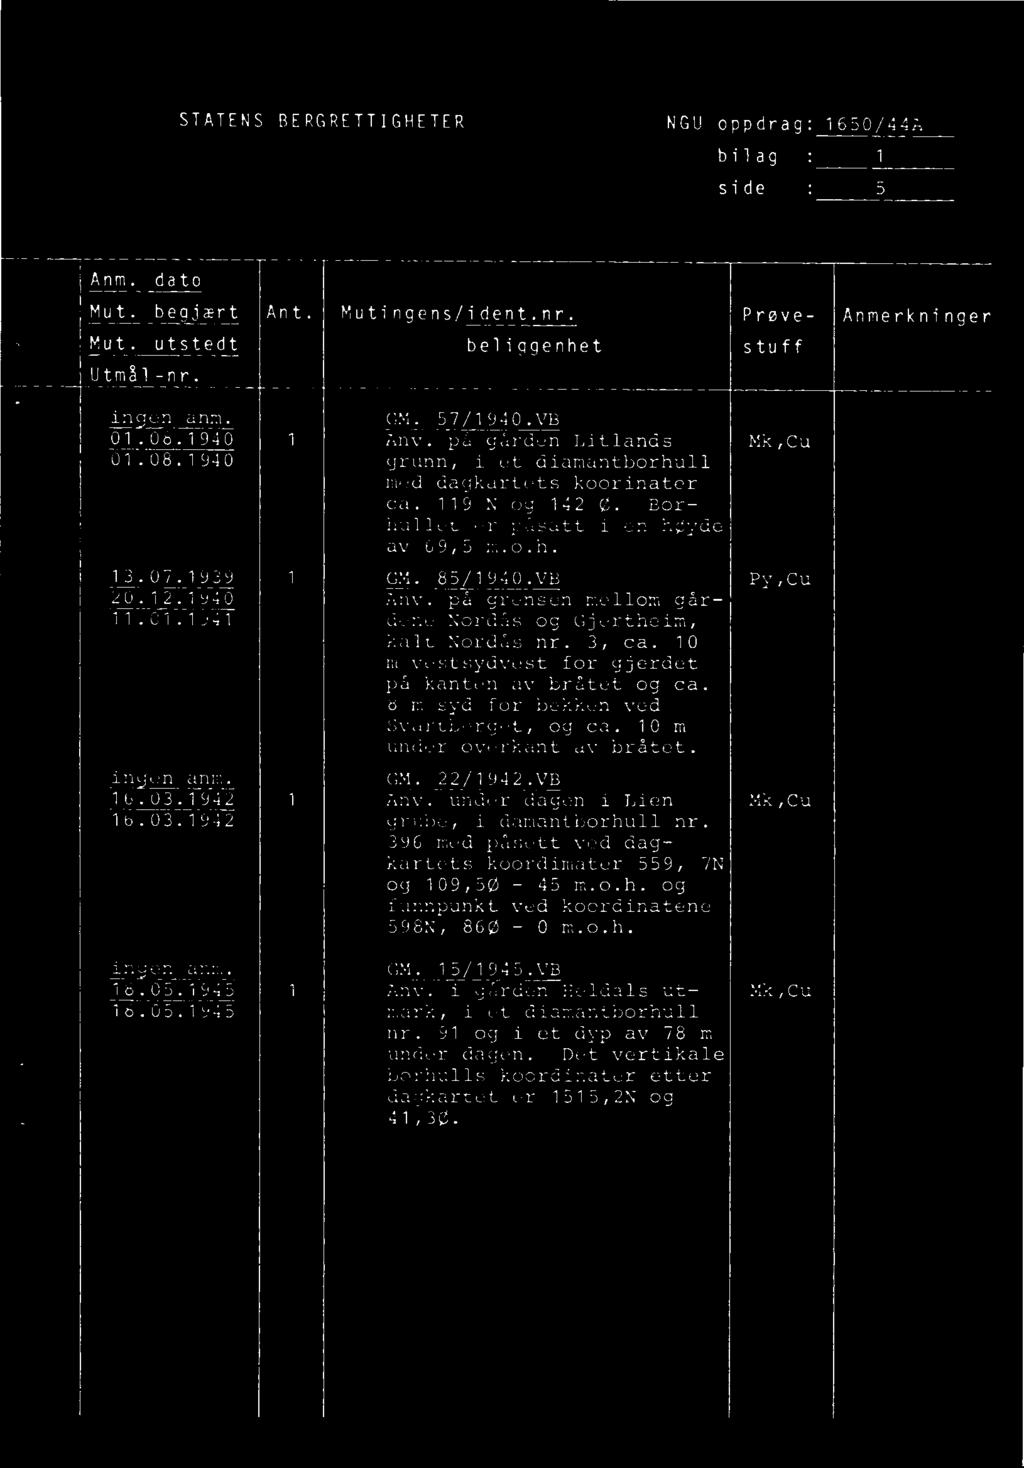 under dagen i Lien Mk,Cu 16.03.1942 grube, i damantborhull nr. 396 med påsett ved dagkartets koordimater 559, 7N og 109,50-45 m.o.h. og funnpunkt ved koordinatene 598N, 860-0 m.o.h. ingen anm.